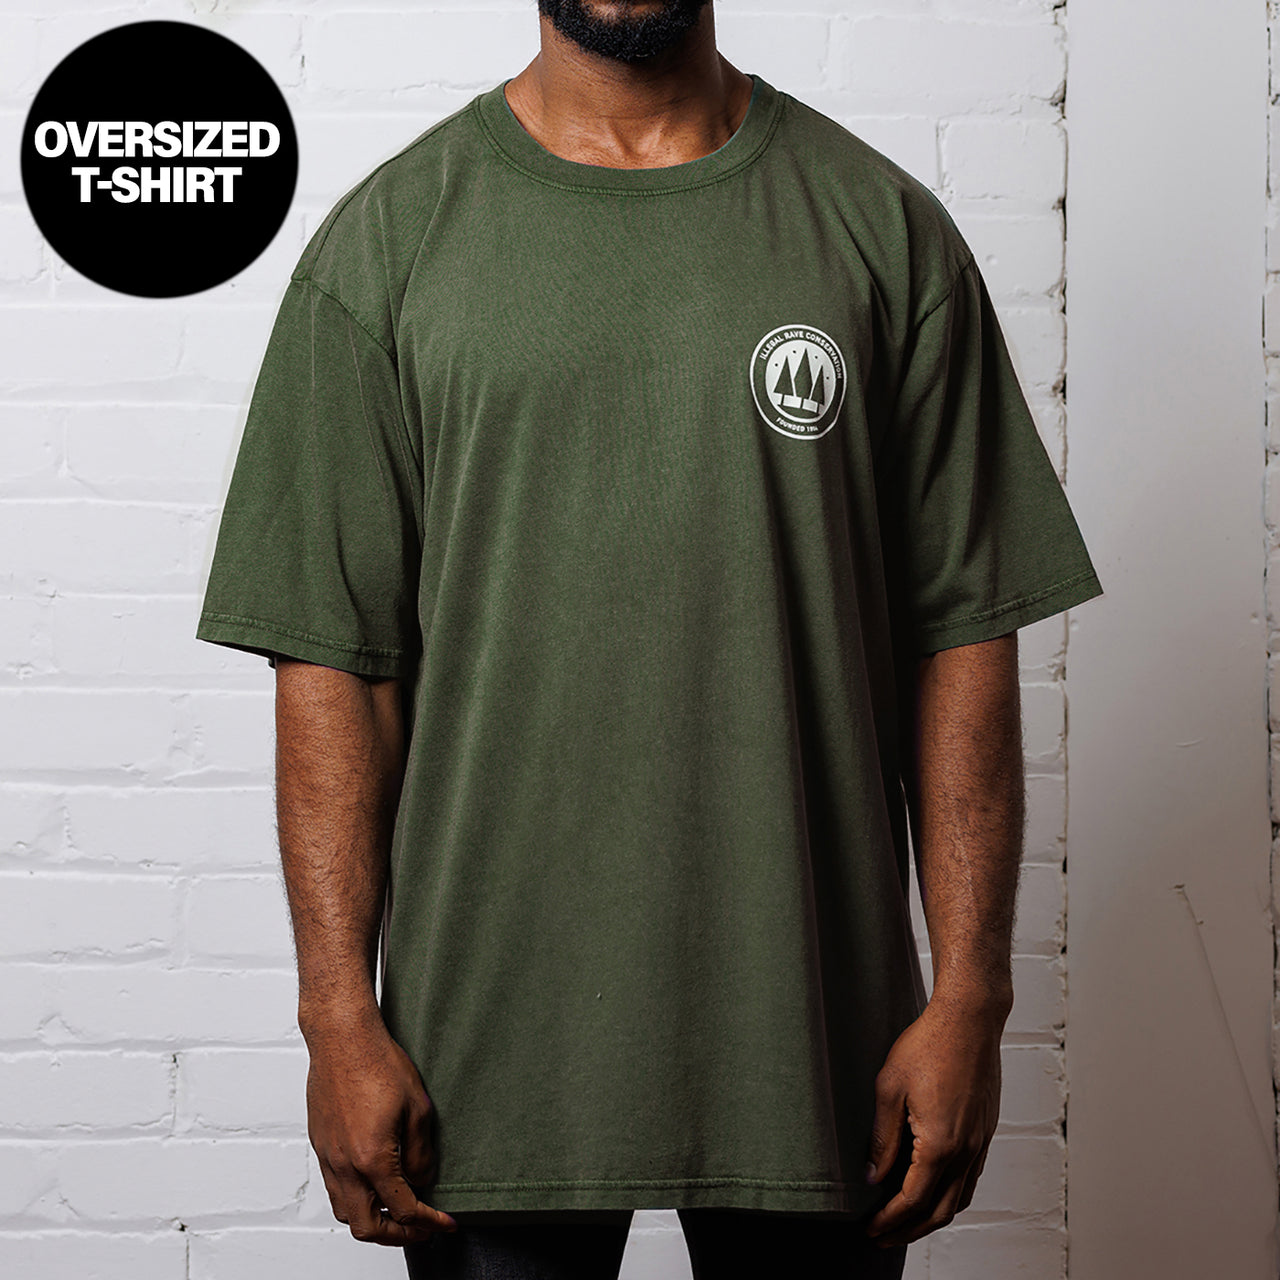 Illegal Rave Conservation Crest  - Oversized Tshirt - Stone Wash Green